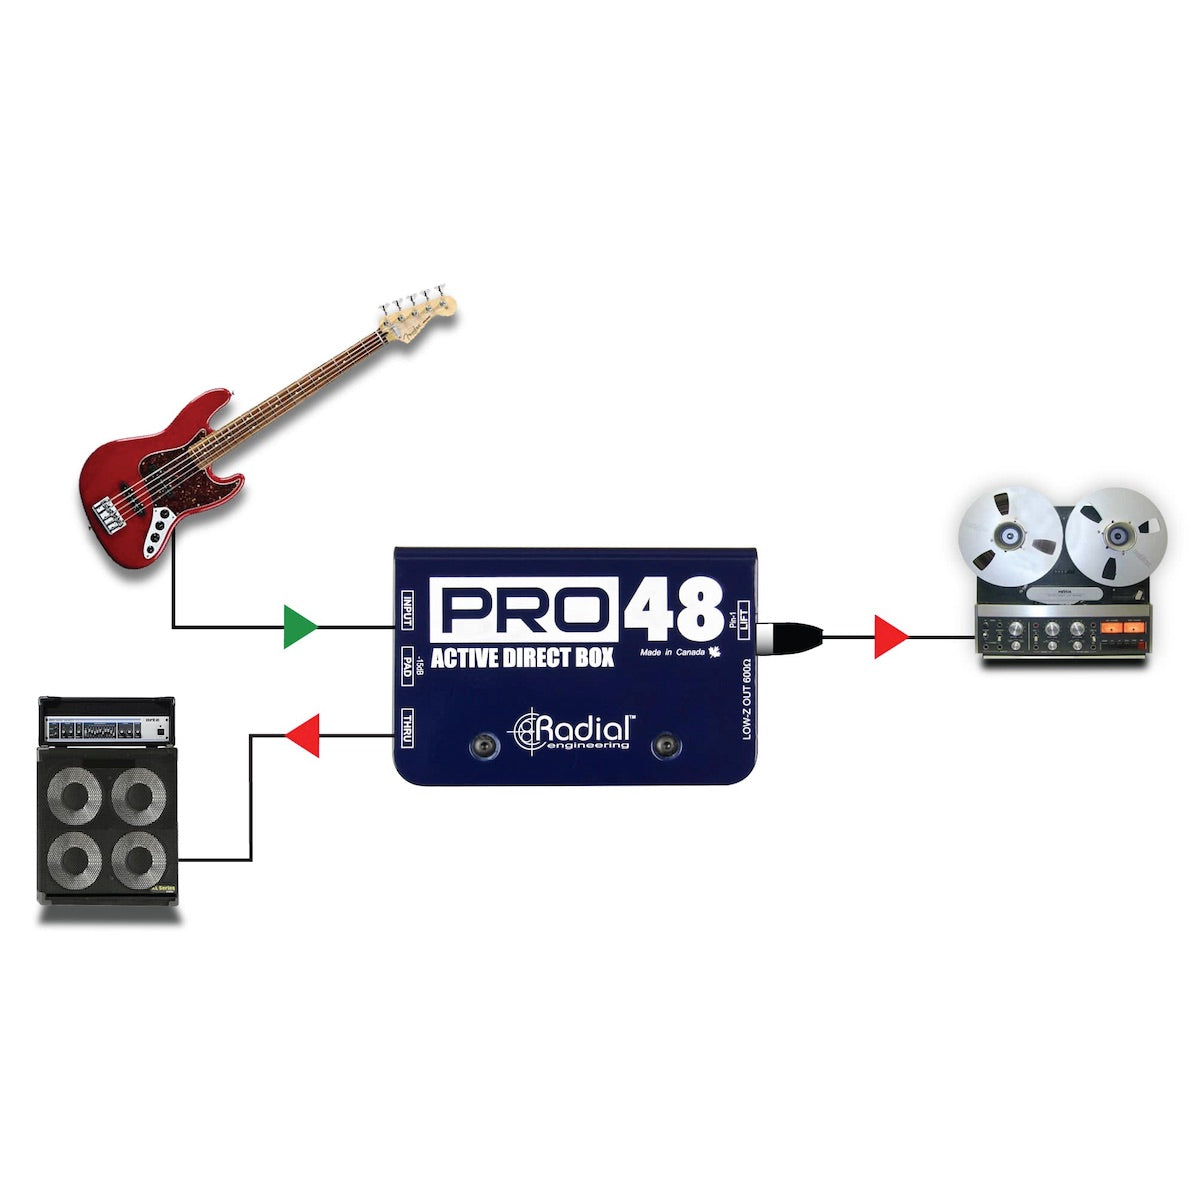 Radial Pro48 Active Direct Box application diagram, bass